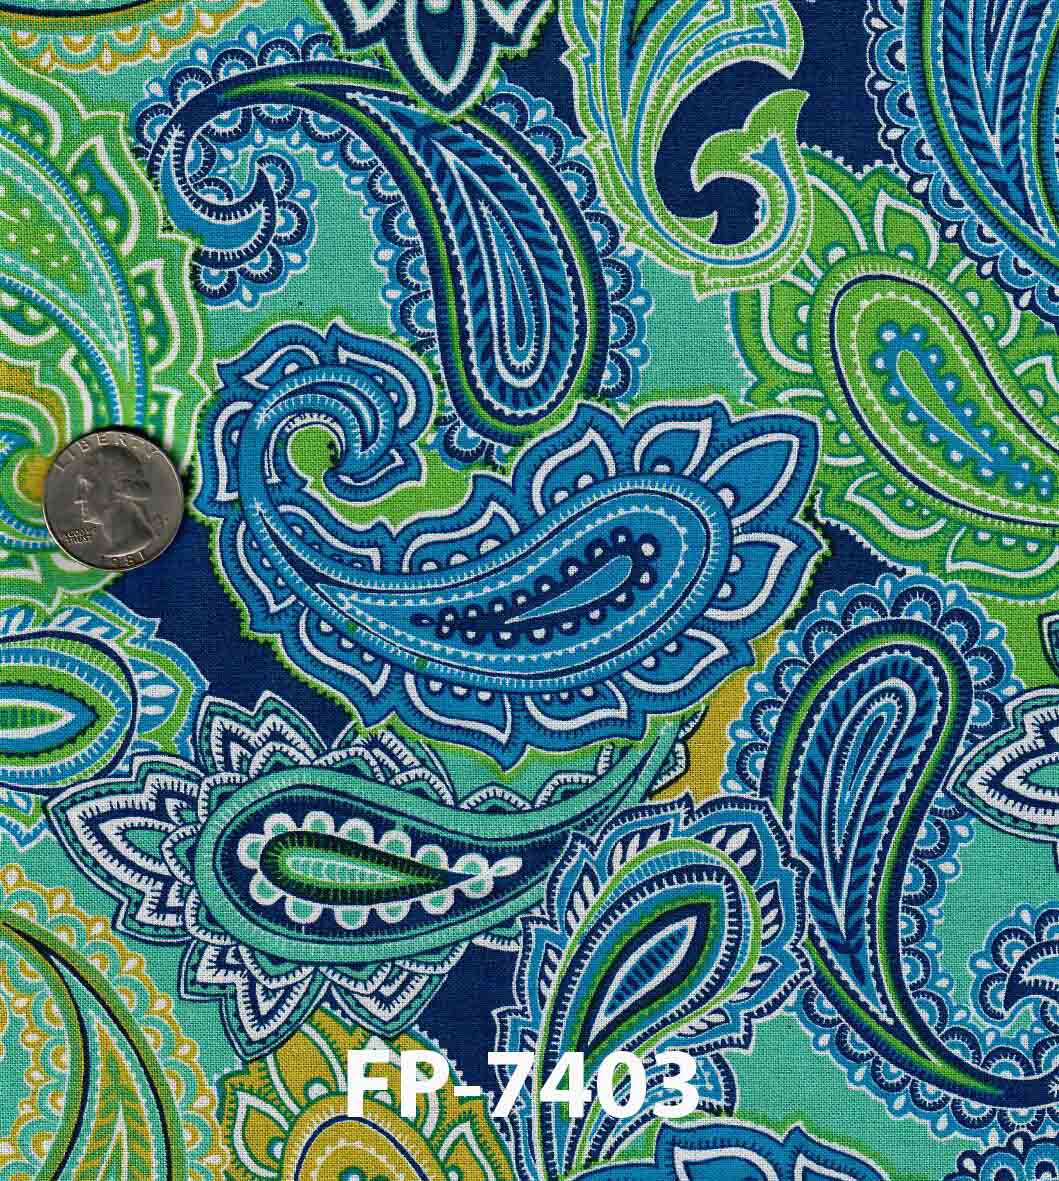 RICHLIN FABRICS WATER MOSAIC FP-7403 PAISLEYS